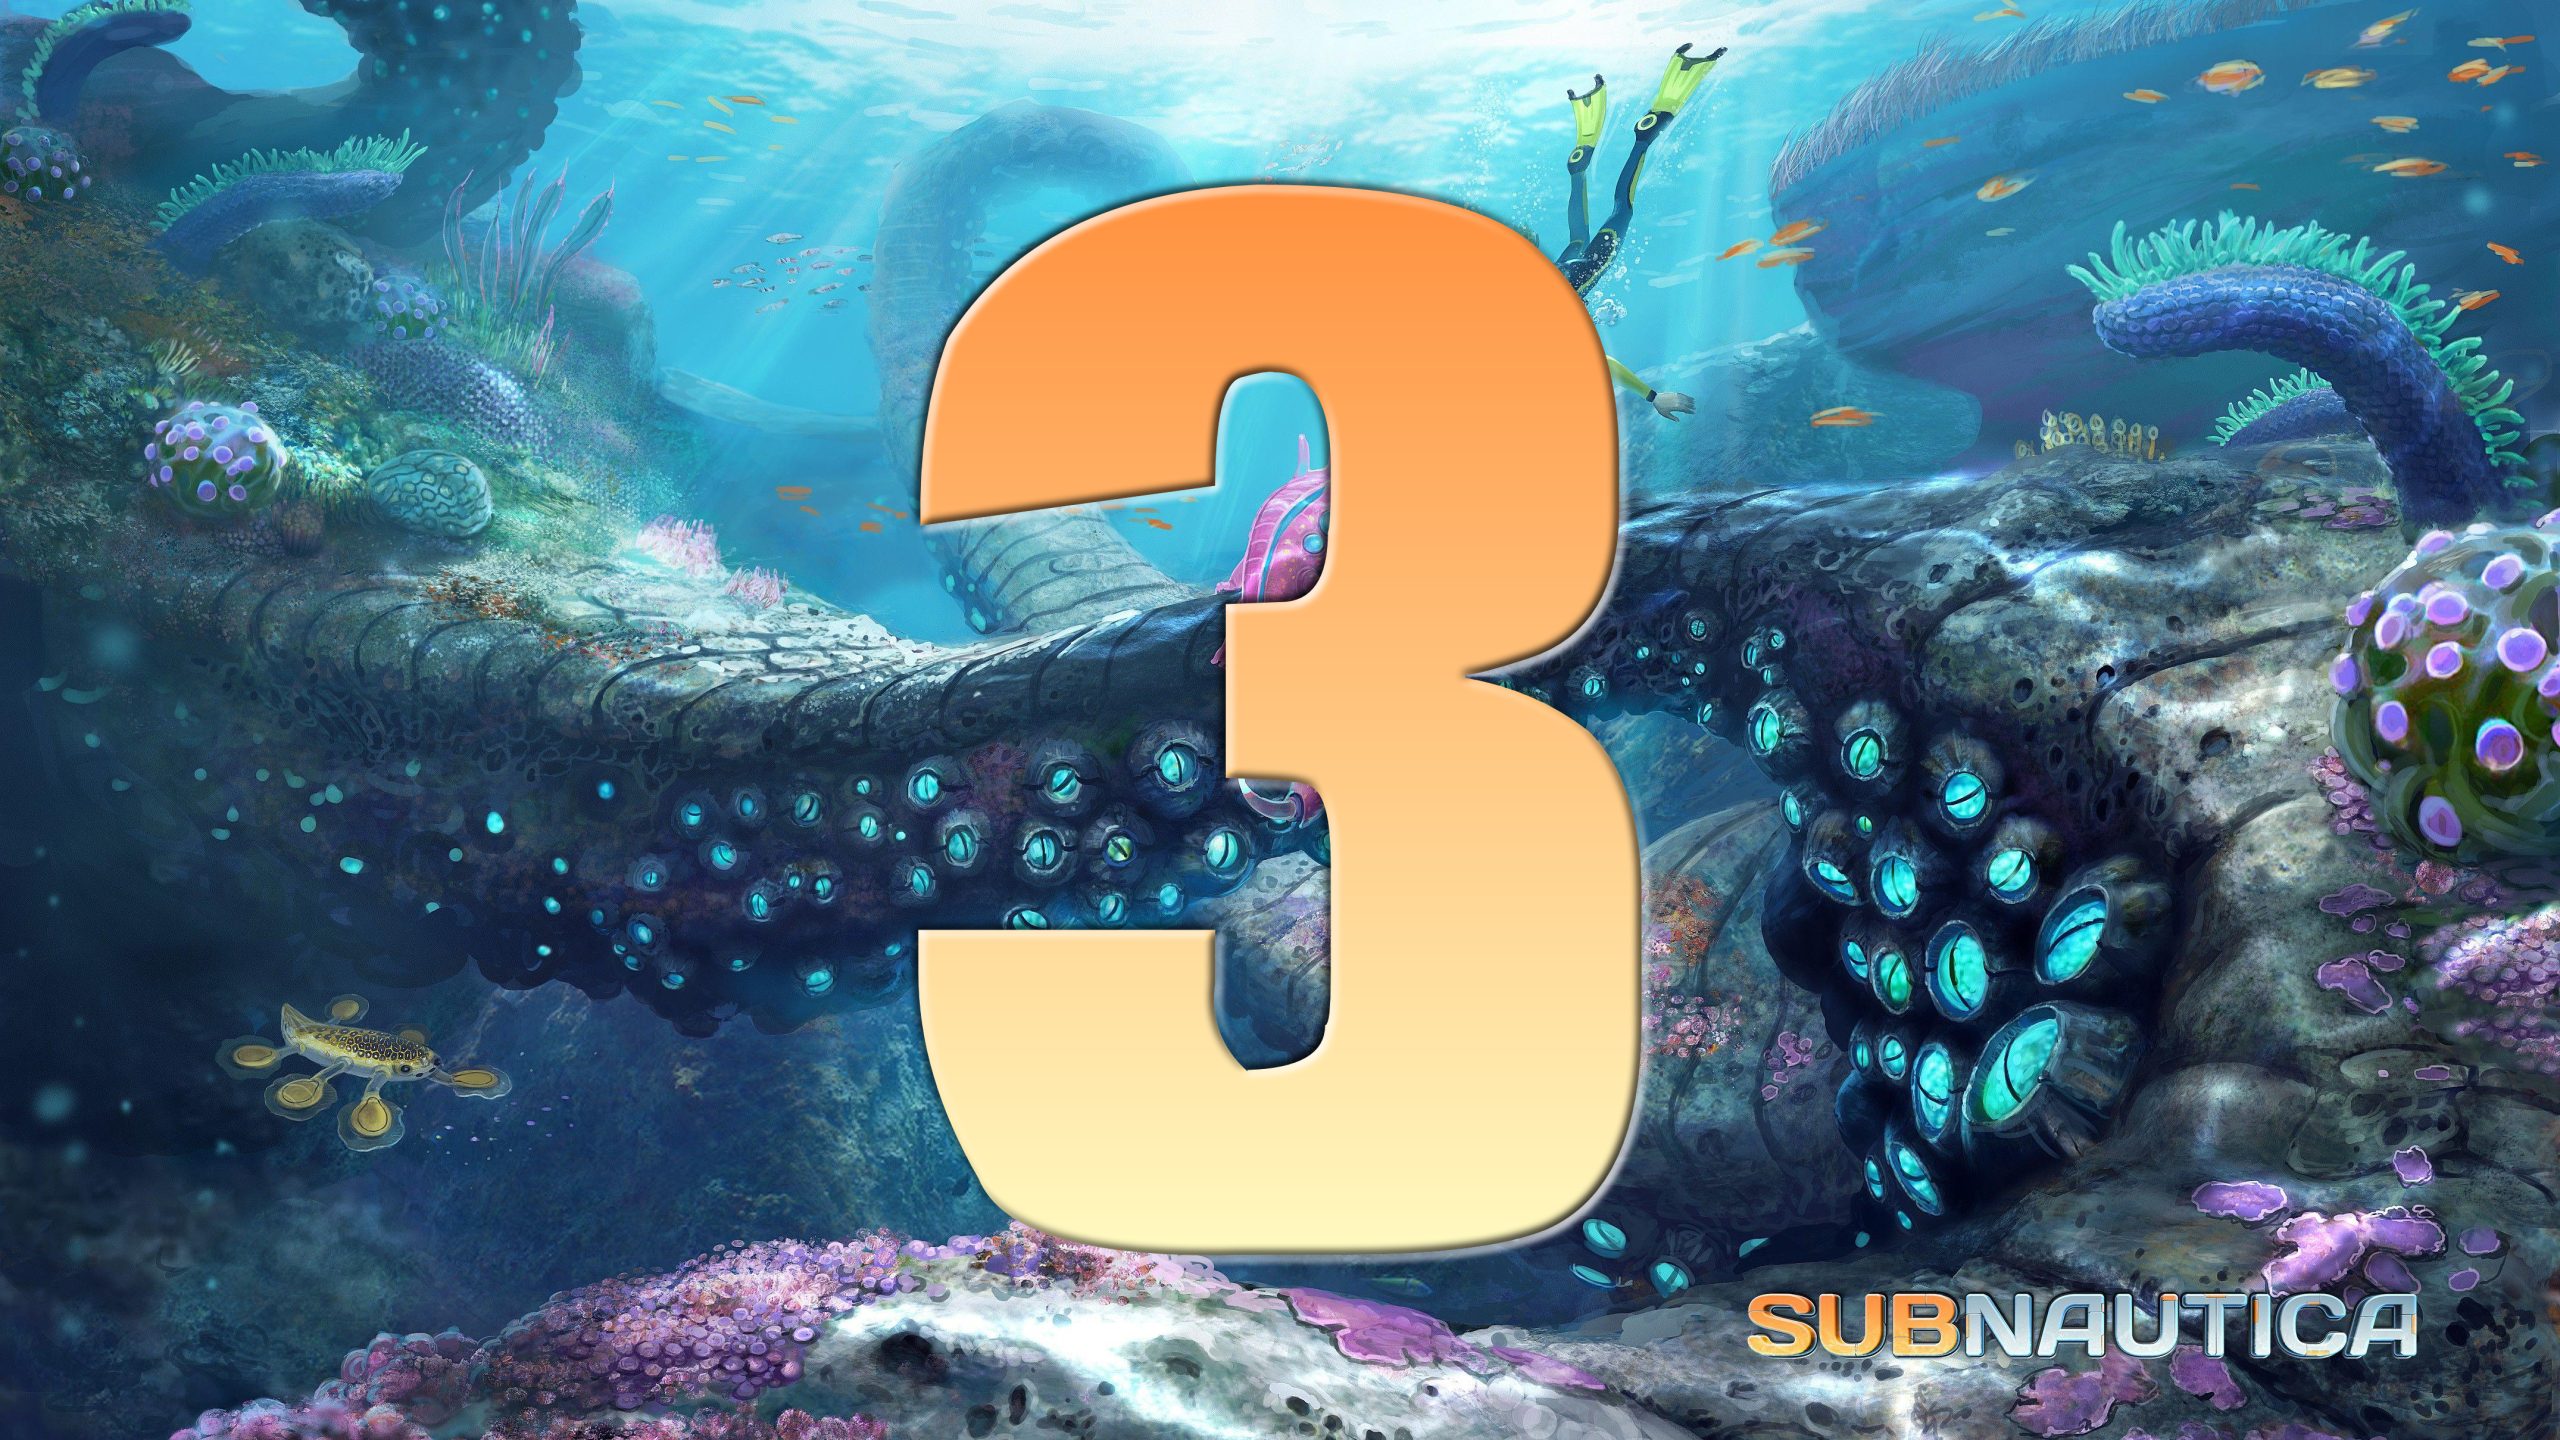 subnautica 3 release date